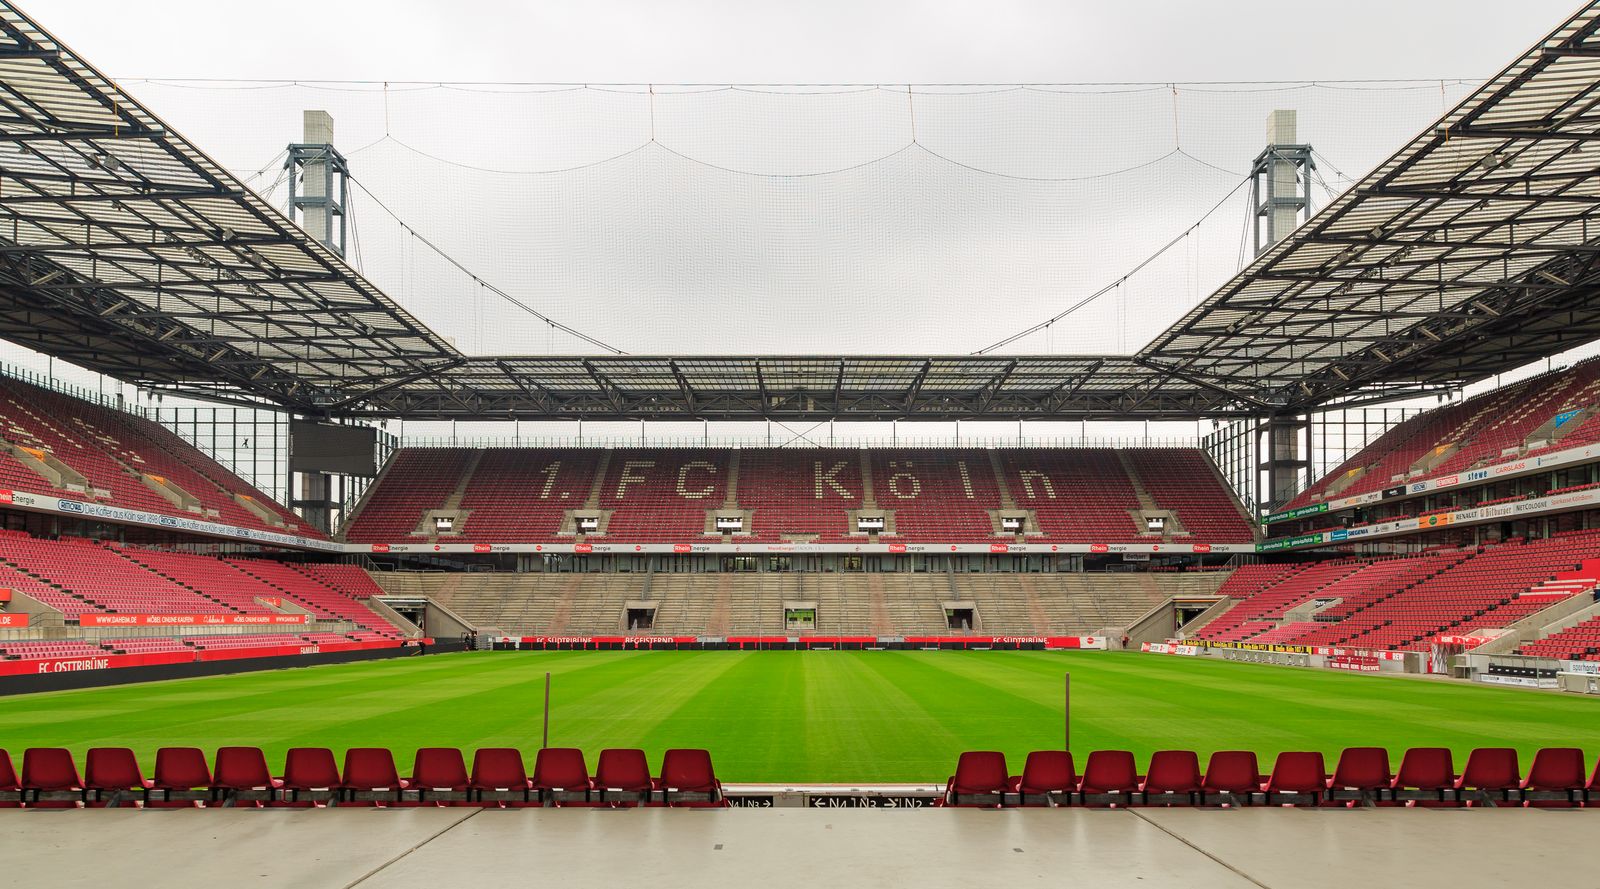 RheinEnergie Stadion (Müngersdorfer Stadion): 889x1600px, 290 kB. 